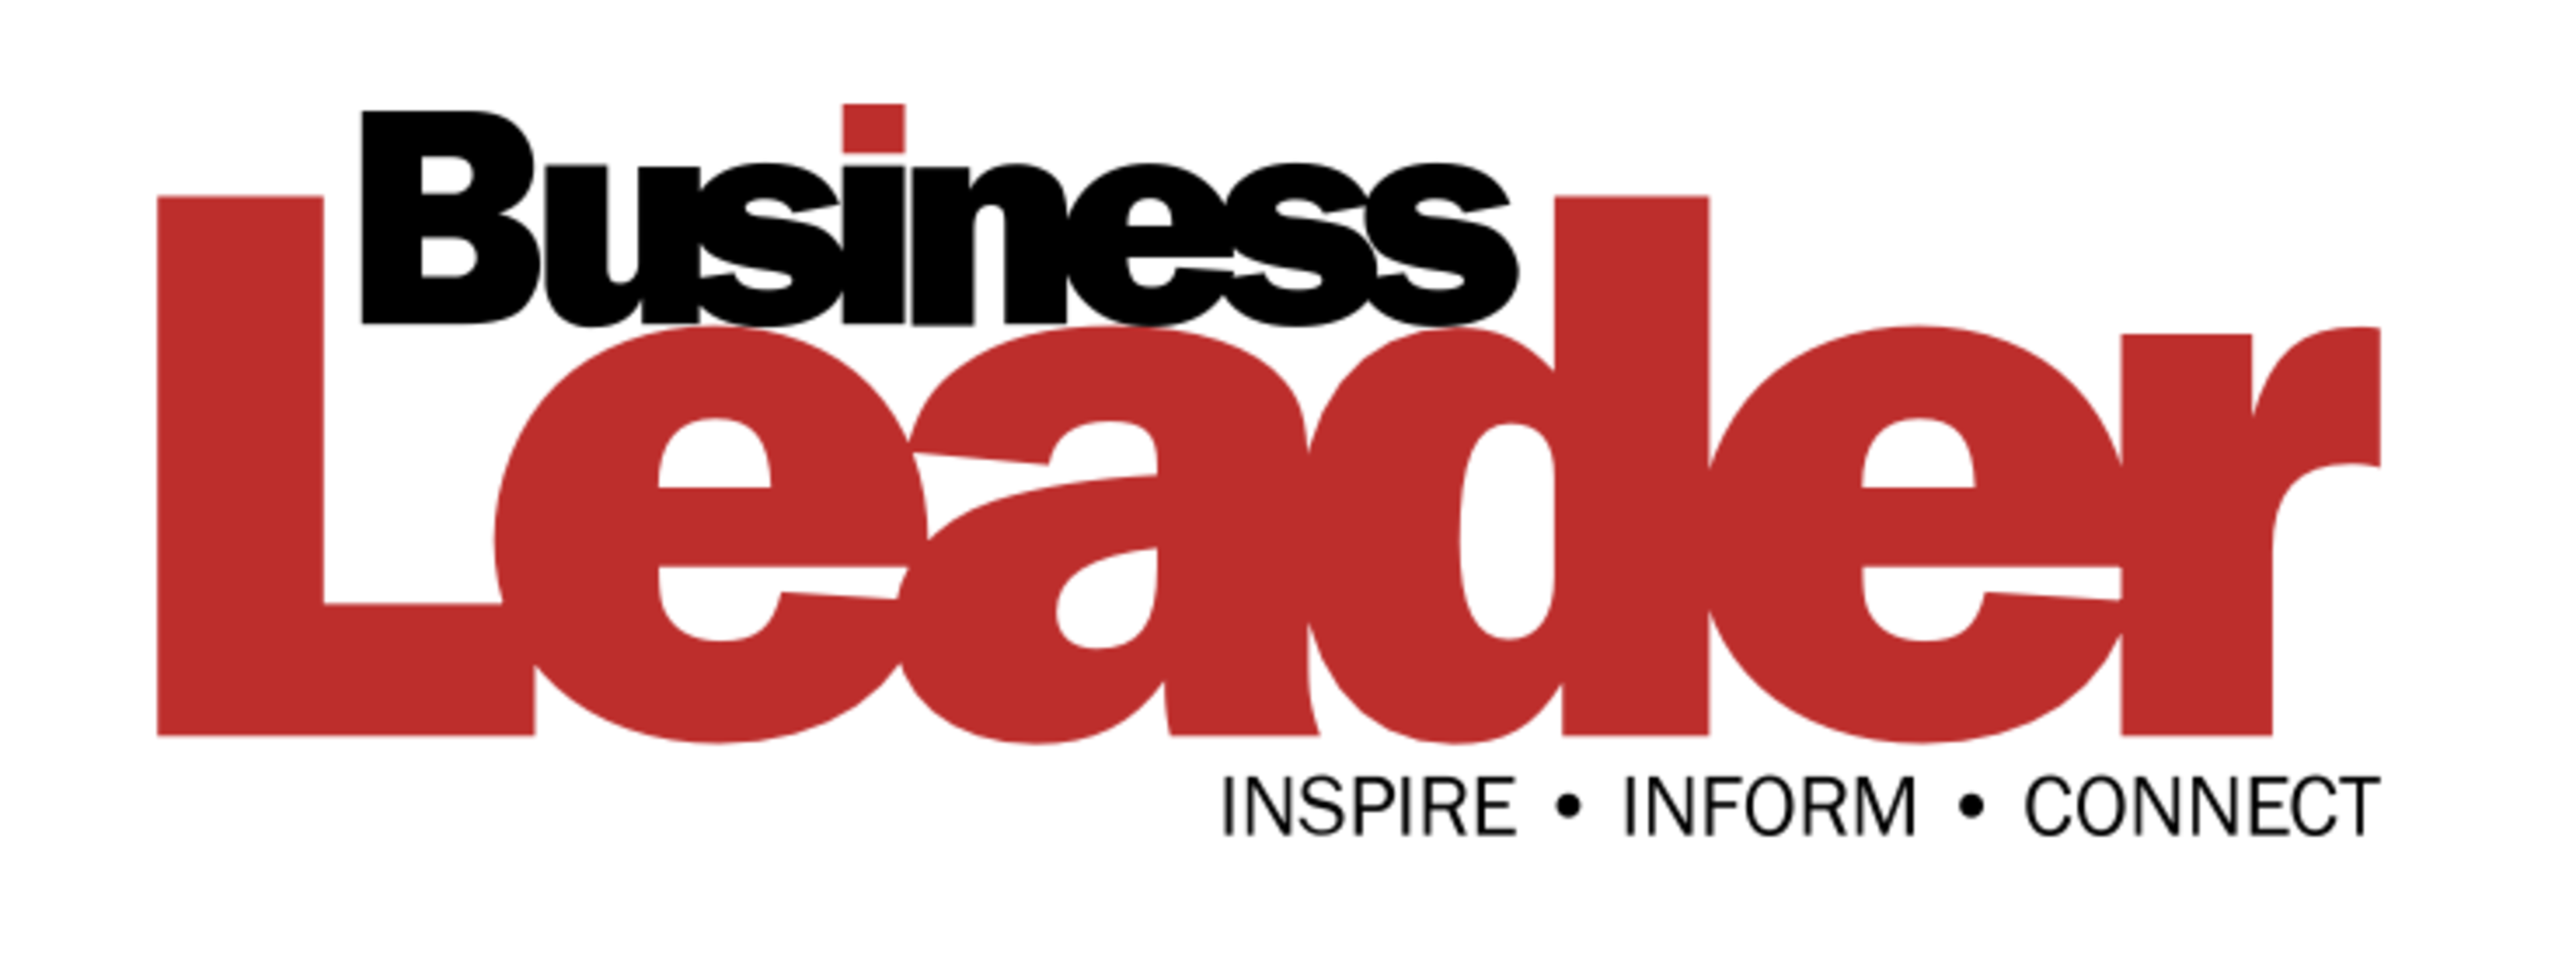 Business Leader logo